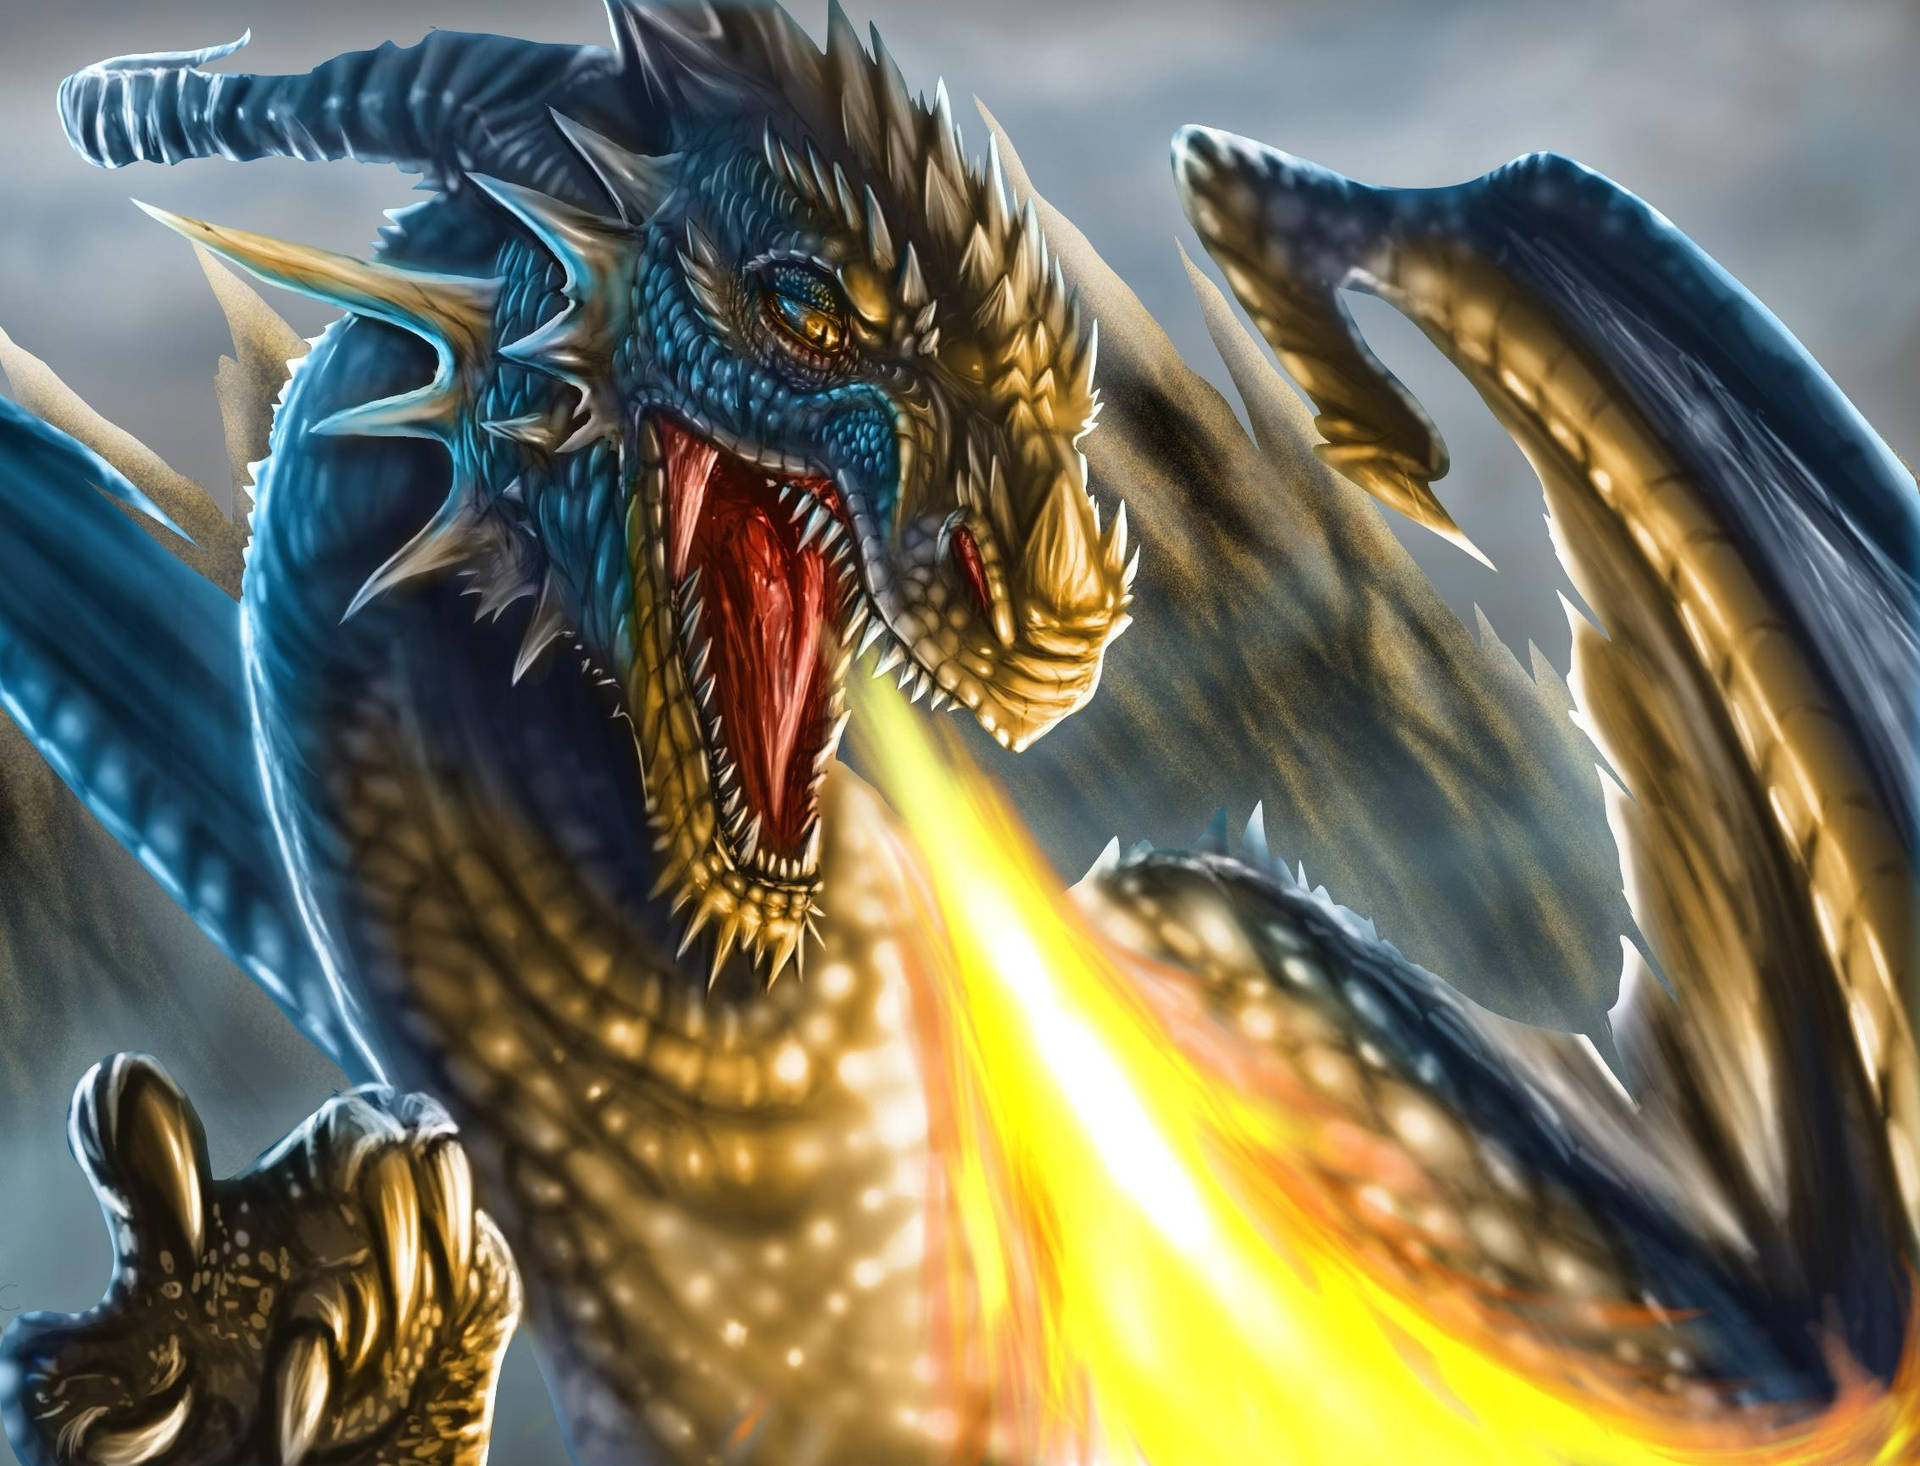 Thorny Fire Breathing Dragon